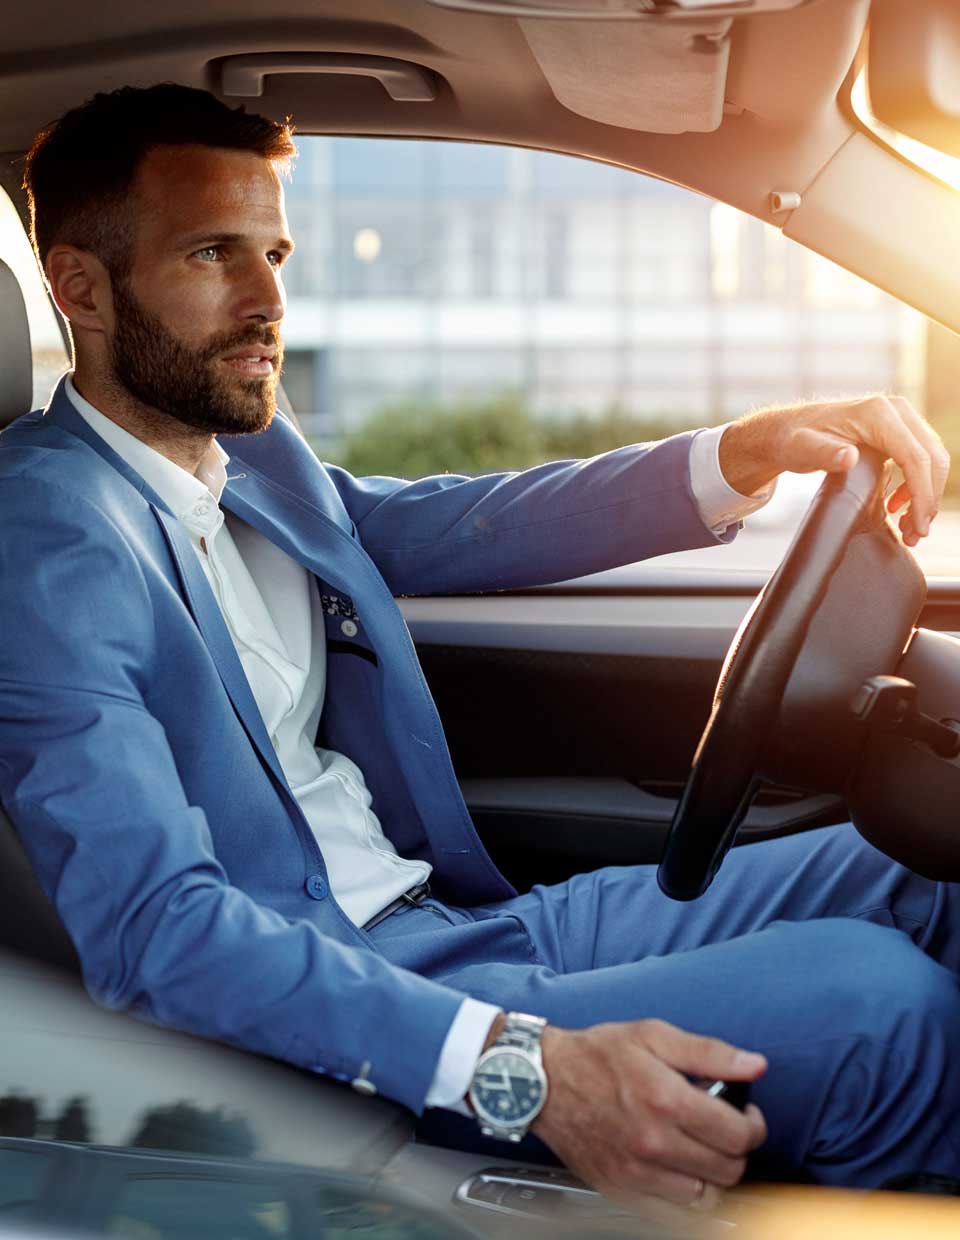 promo image for professional using a company car